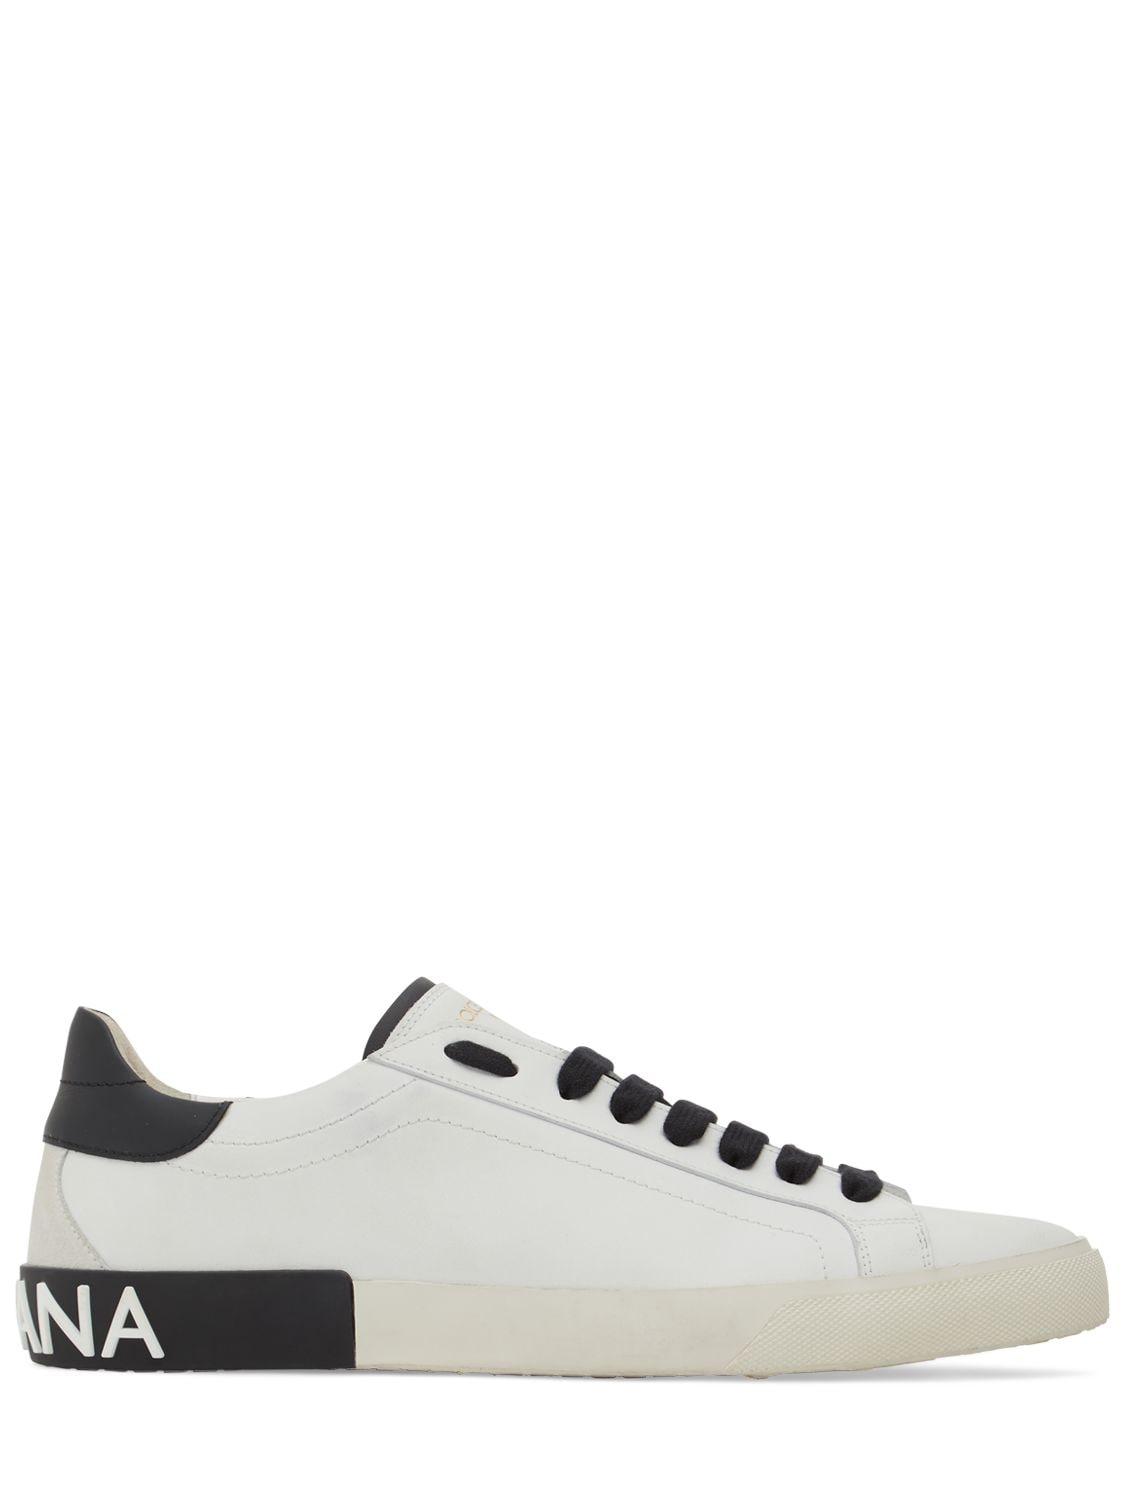 Dolce & Gabbana New Portofino Low Top Sneakers In White,black